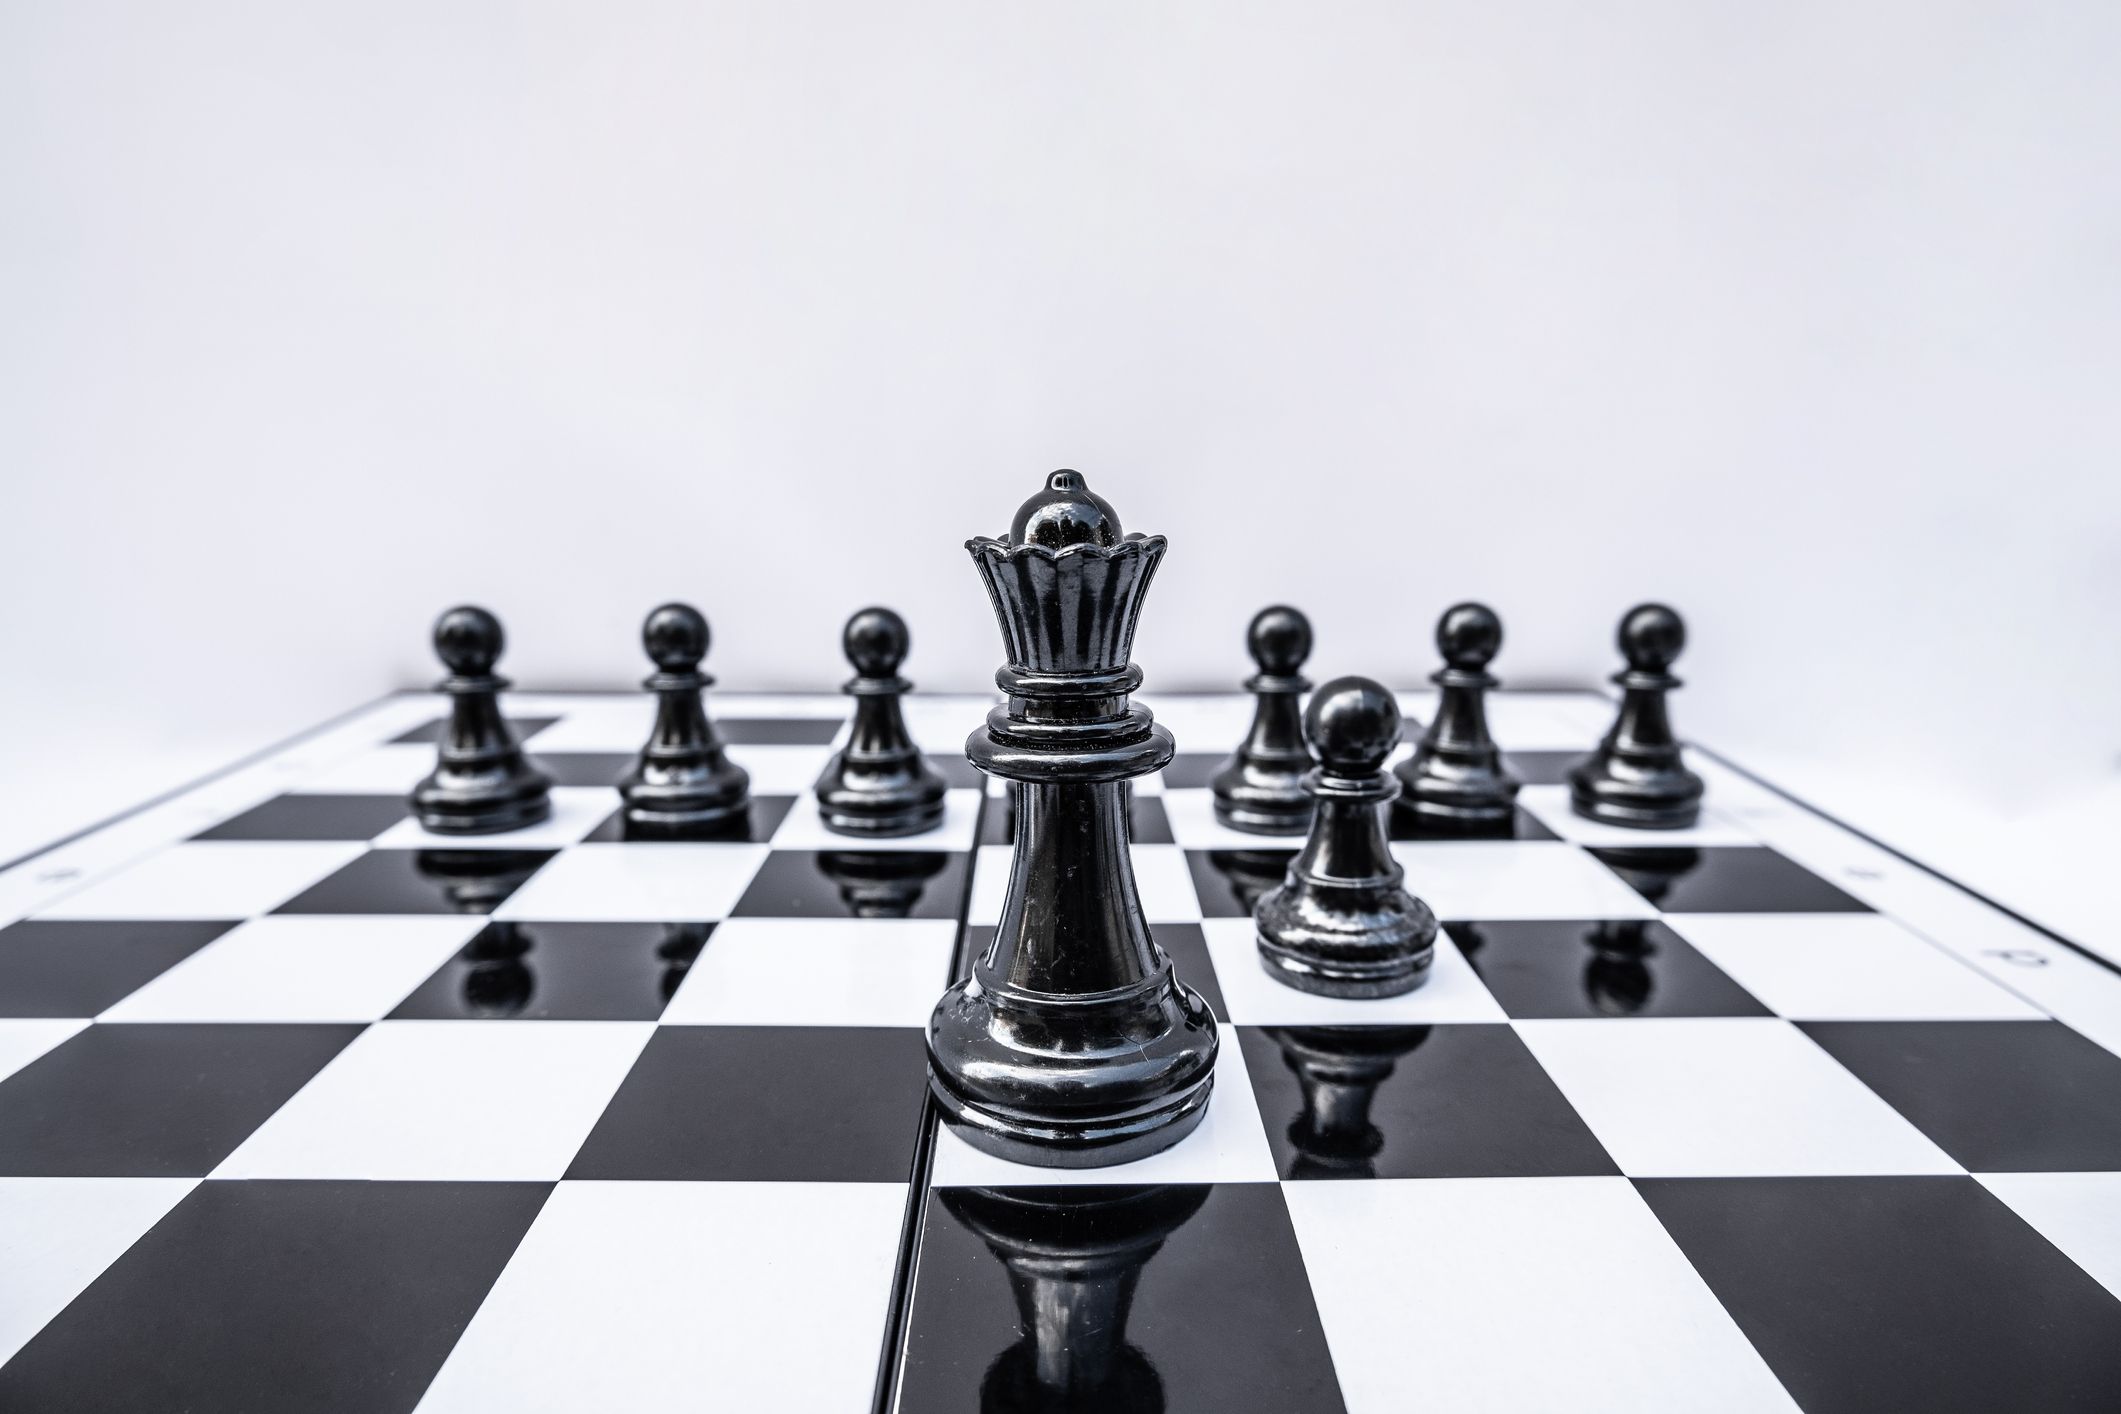 El tablero infinito de Chess.com, la plataforma de ajedrez con 150